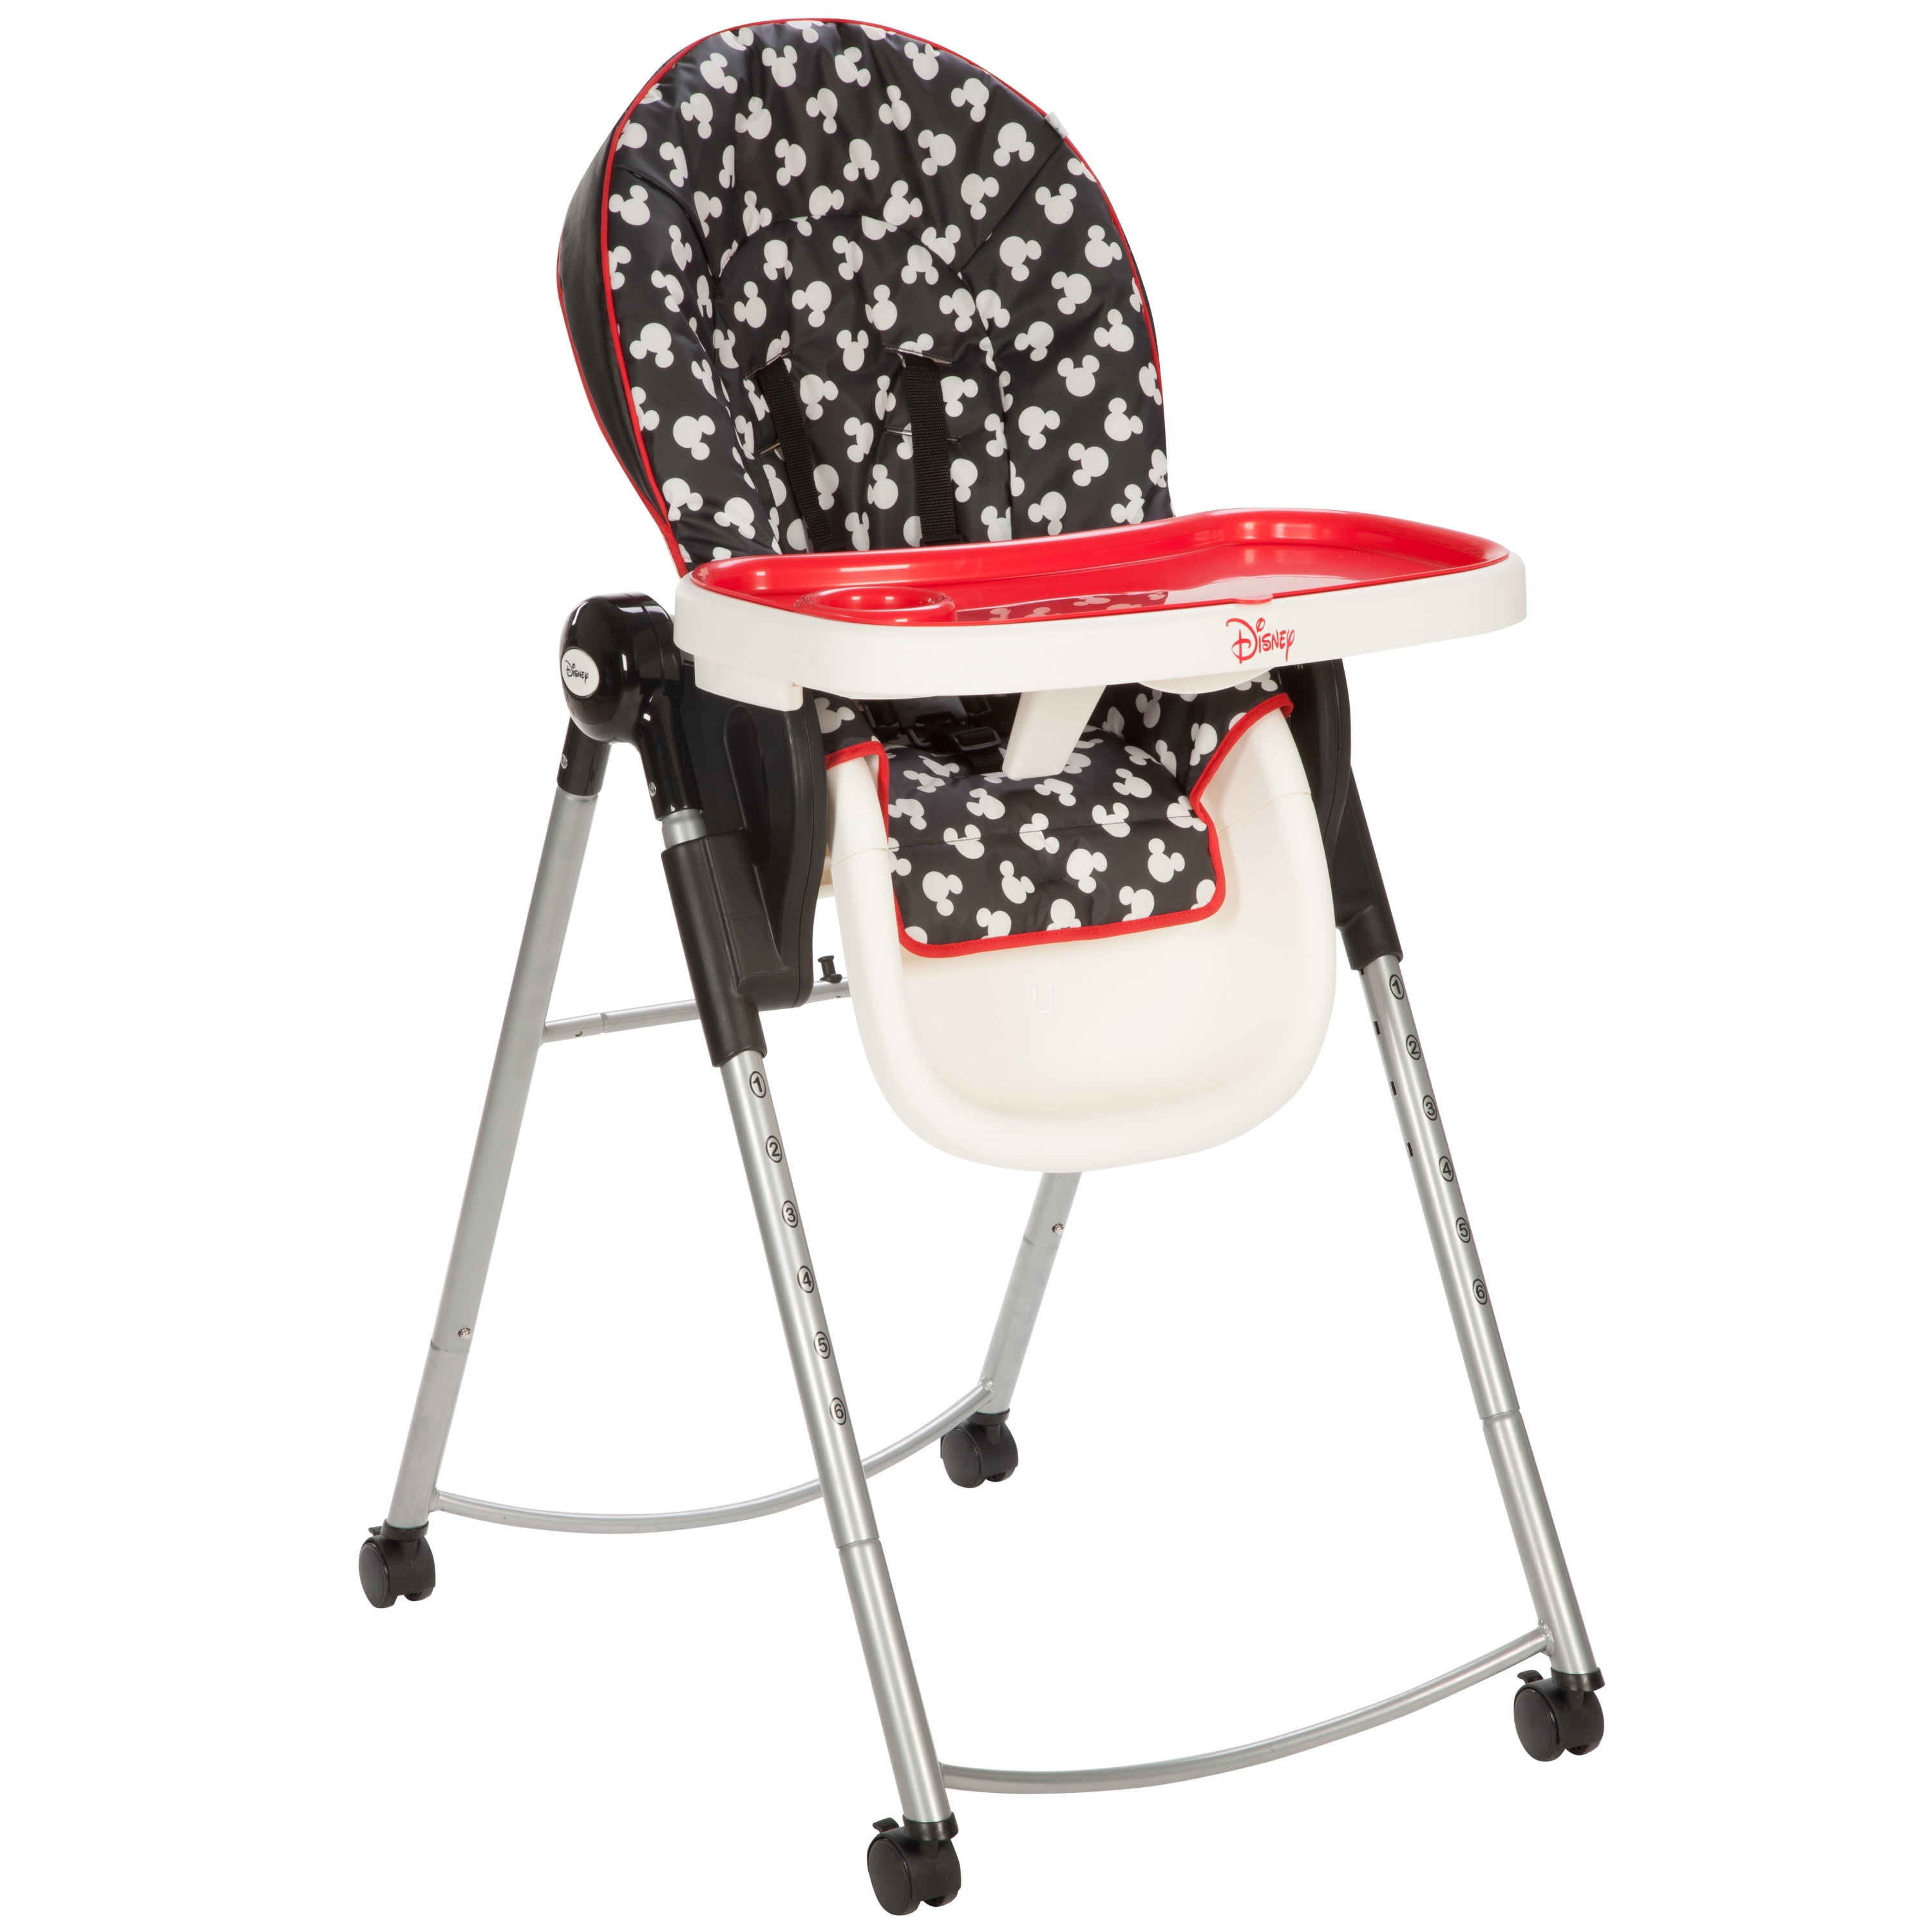 Disney Baby Adjustable High Chair